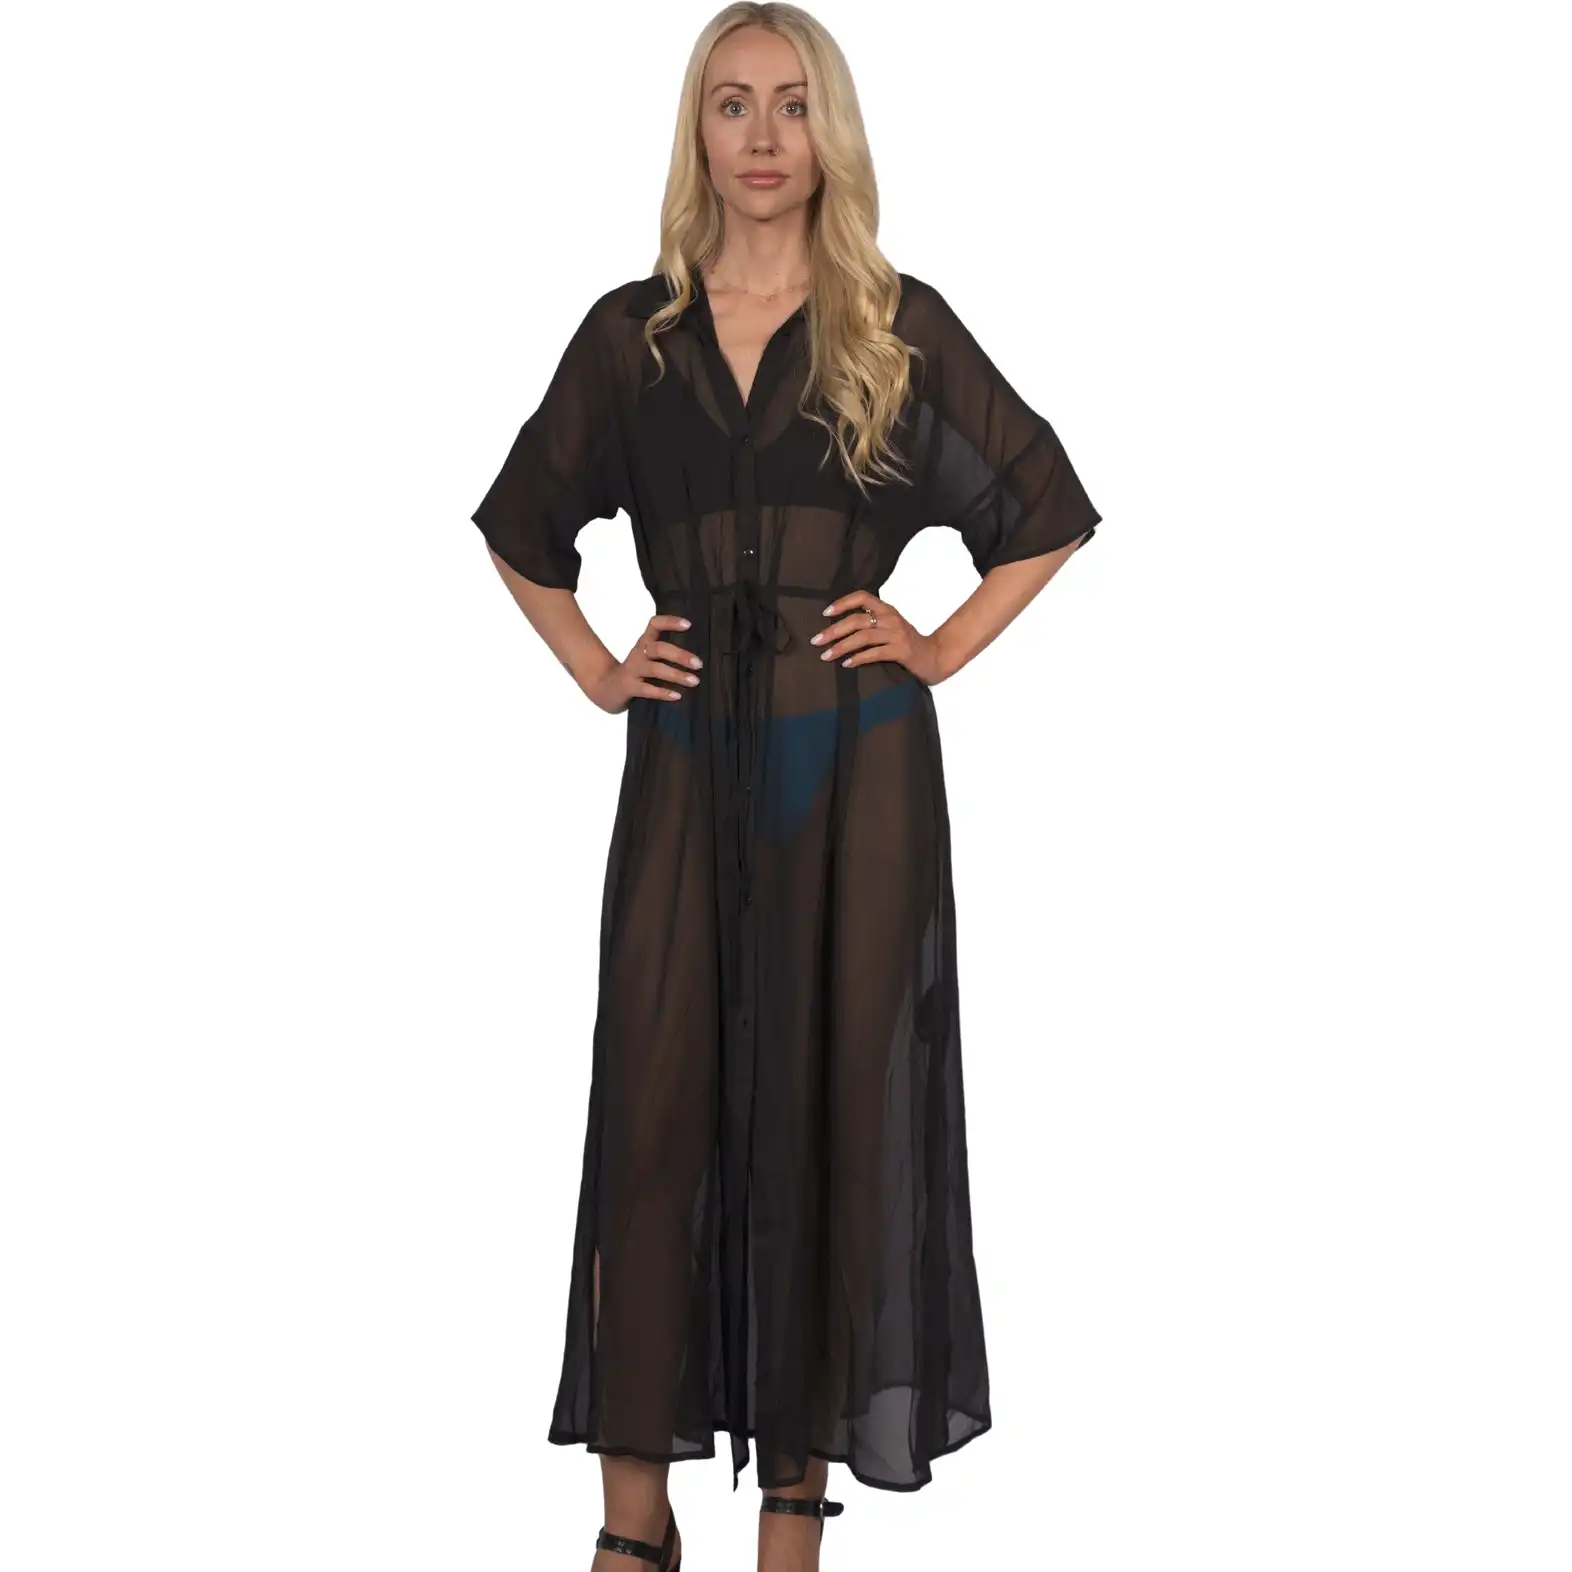 Topshop Women's Maxi Sheer Beach Shirt Dress - Black